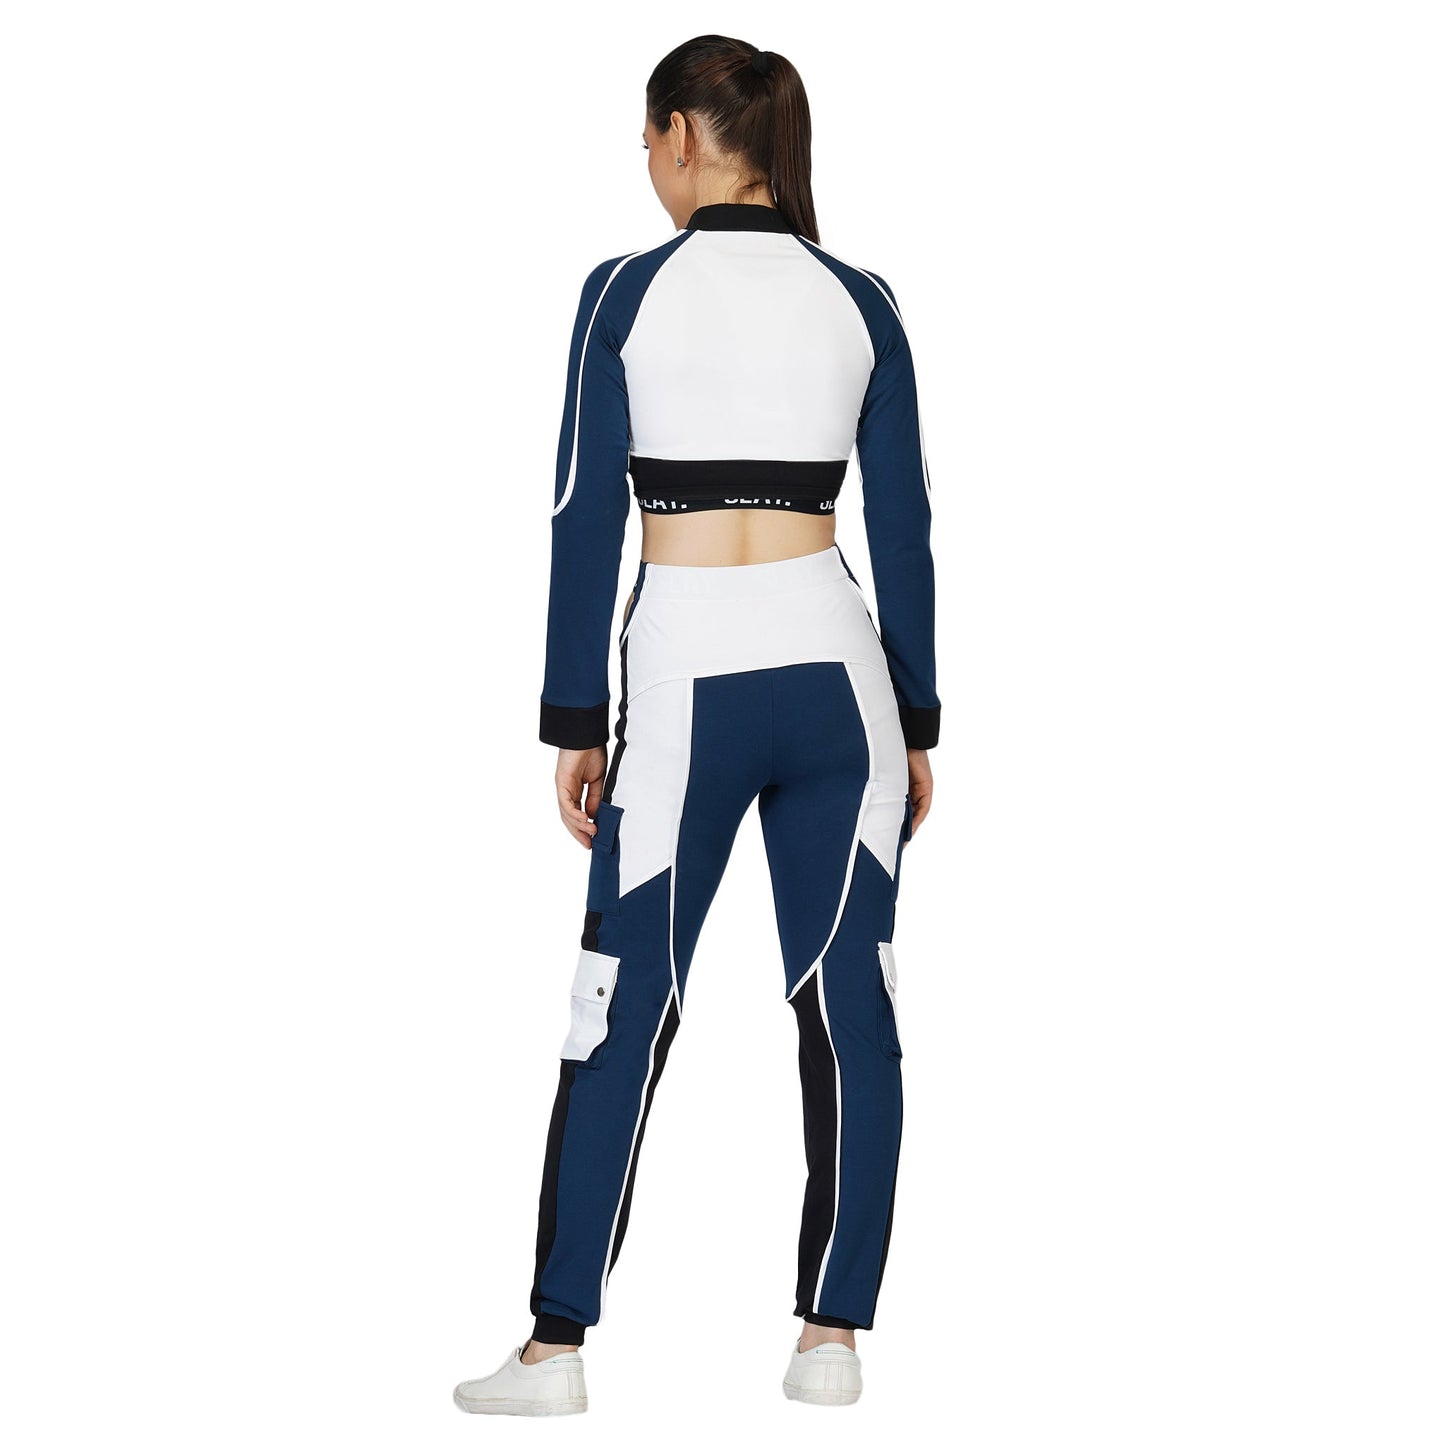 SLAY. Women's Activewear Navy Blue Black White Colorblock Crop Jacket